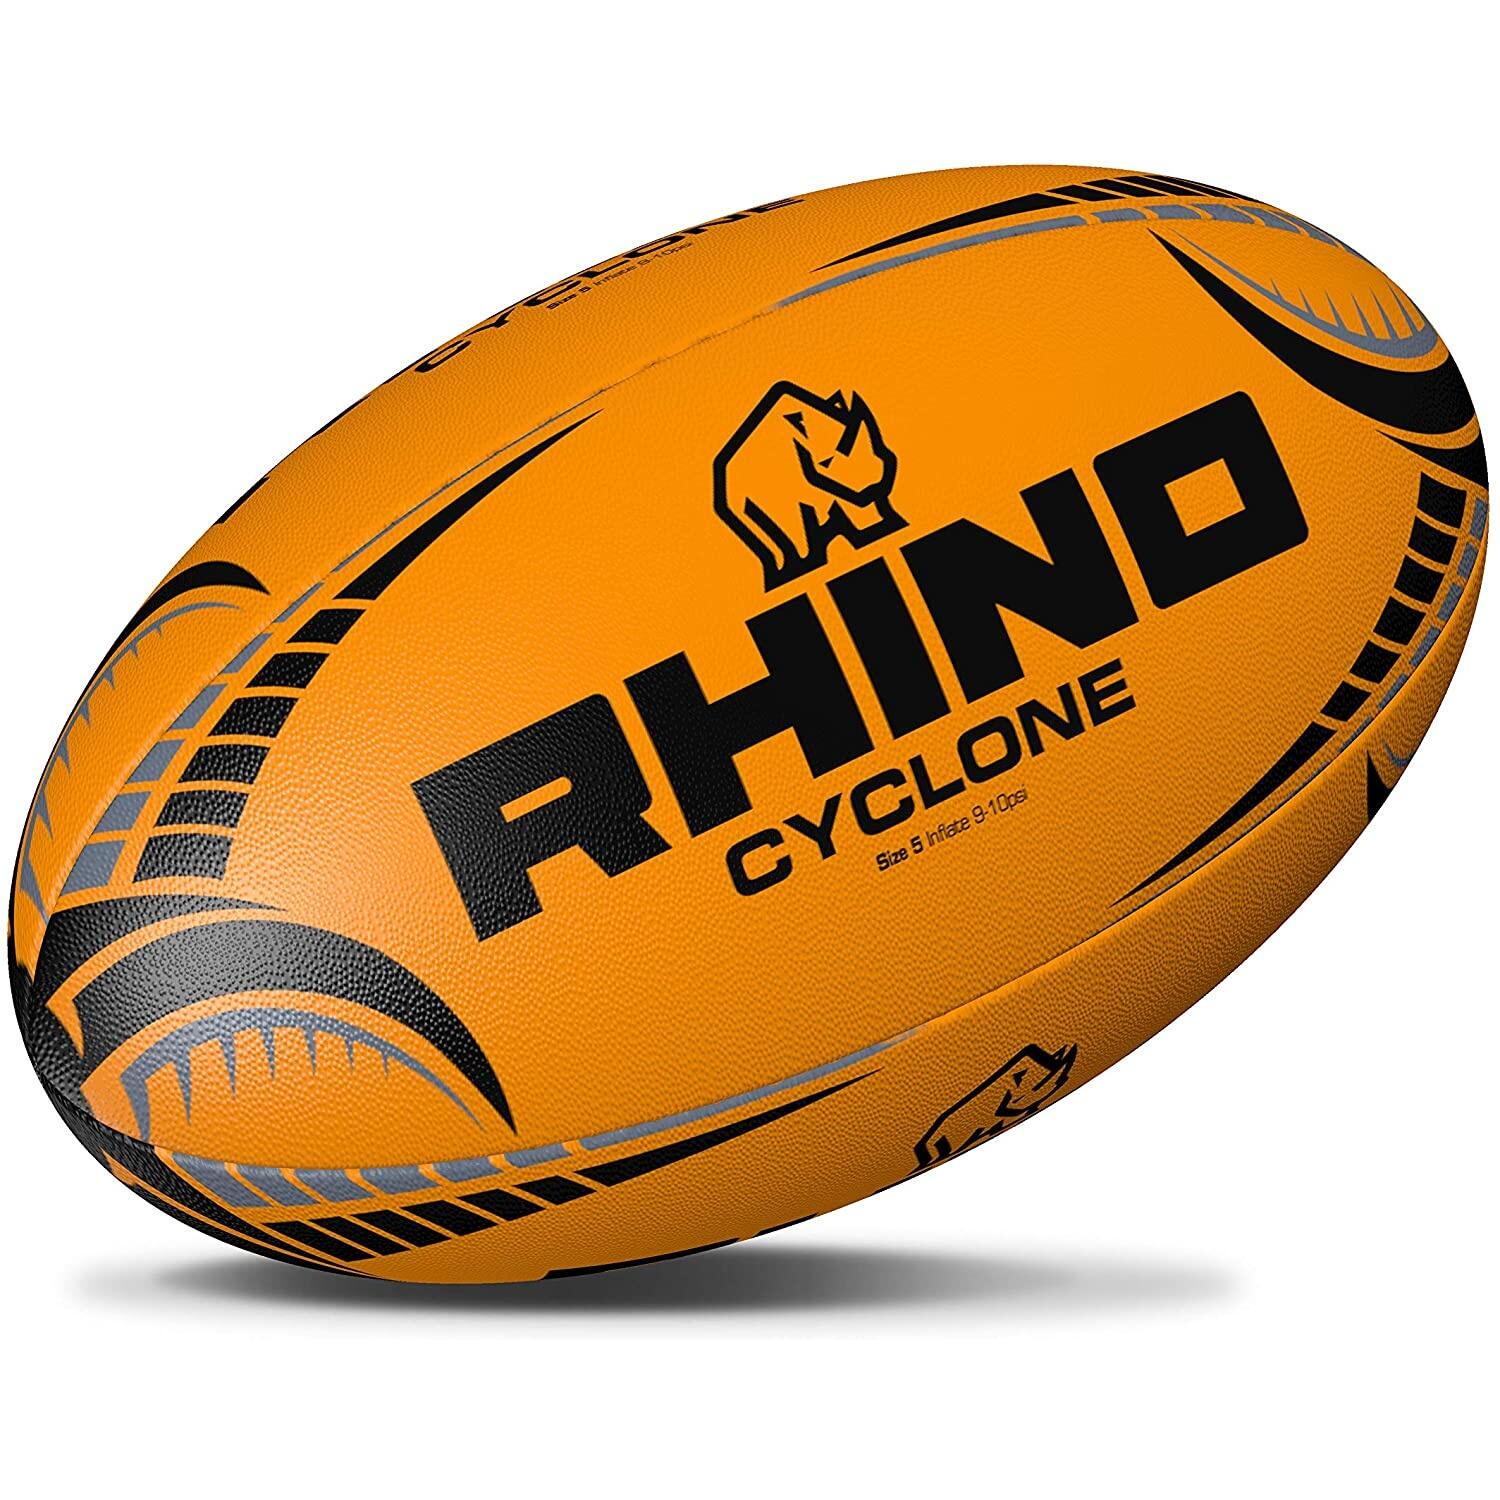 Cyclone Rugby Ball (Fluorescent Orange) 2/4